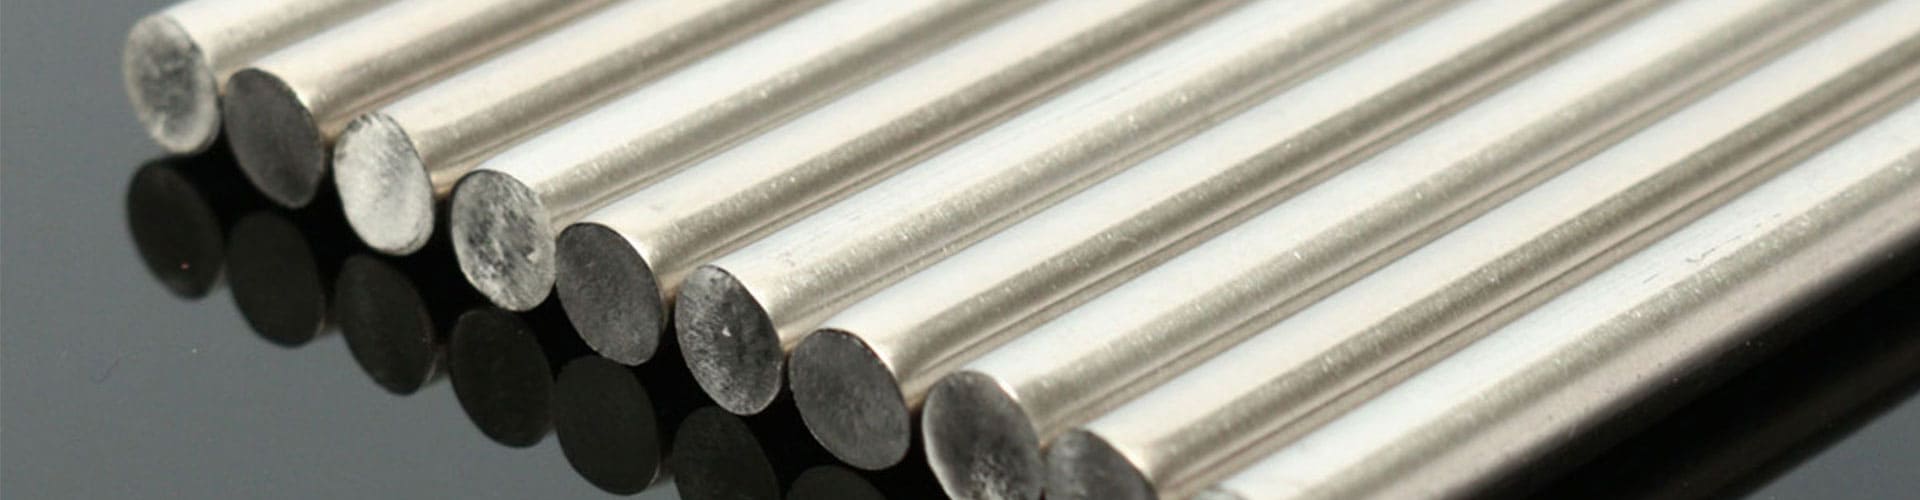 nickel-alloy-201-round-bars-rods-manufacturer-exporter-supplier-in-sri-lanka